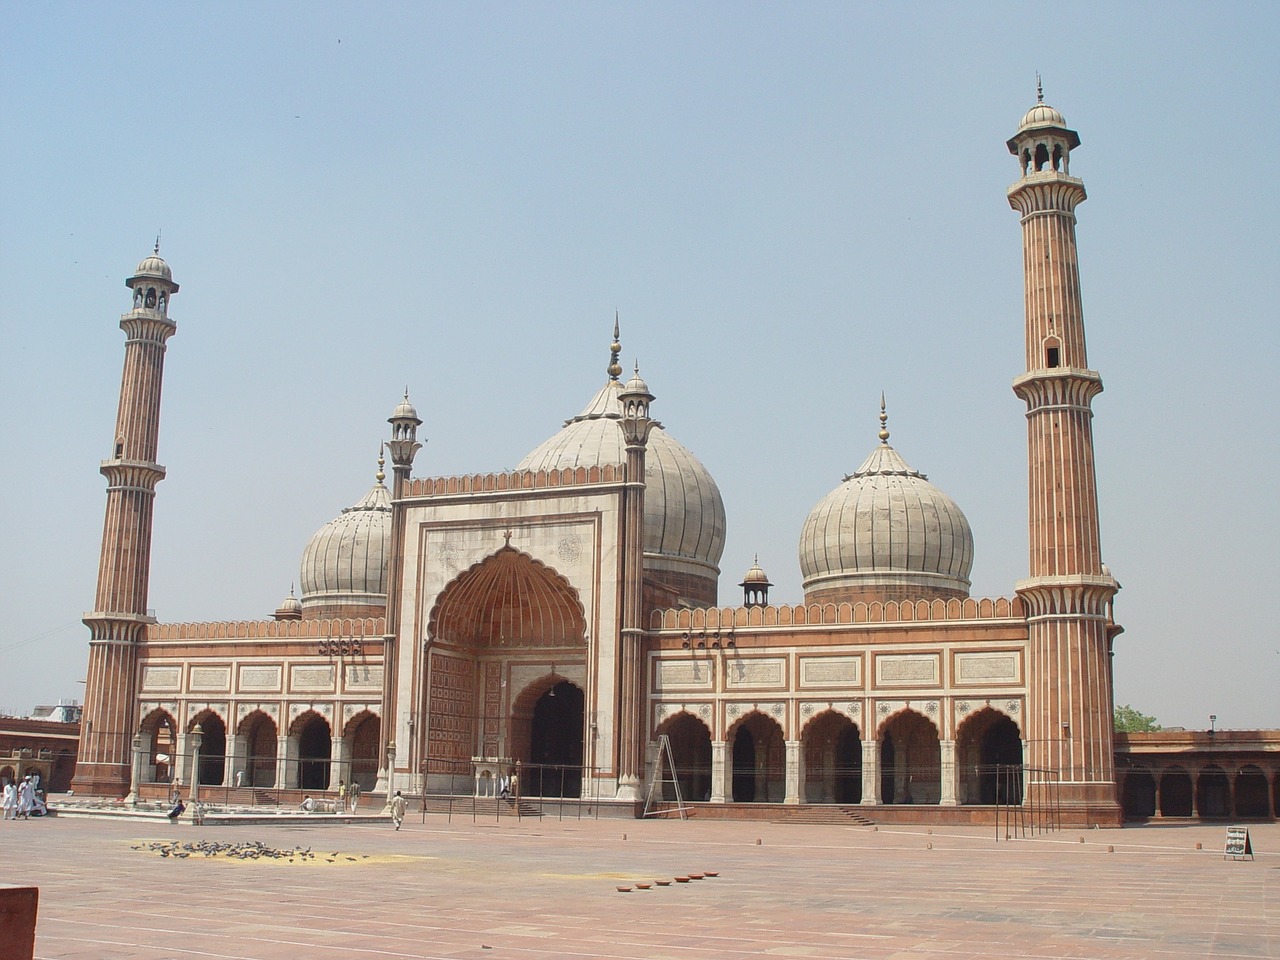 Picture of Jama Masjid in Delhi. Here's how to spend 3 days in Delhi, India - with recommendations for food in Delhi, Delhi attractions, and tips for Delhi from a local. #Delhi #NewDelhi #olddelhi #India #Asia #Delhitravel #delhiguide #delhiitinerary